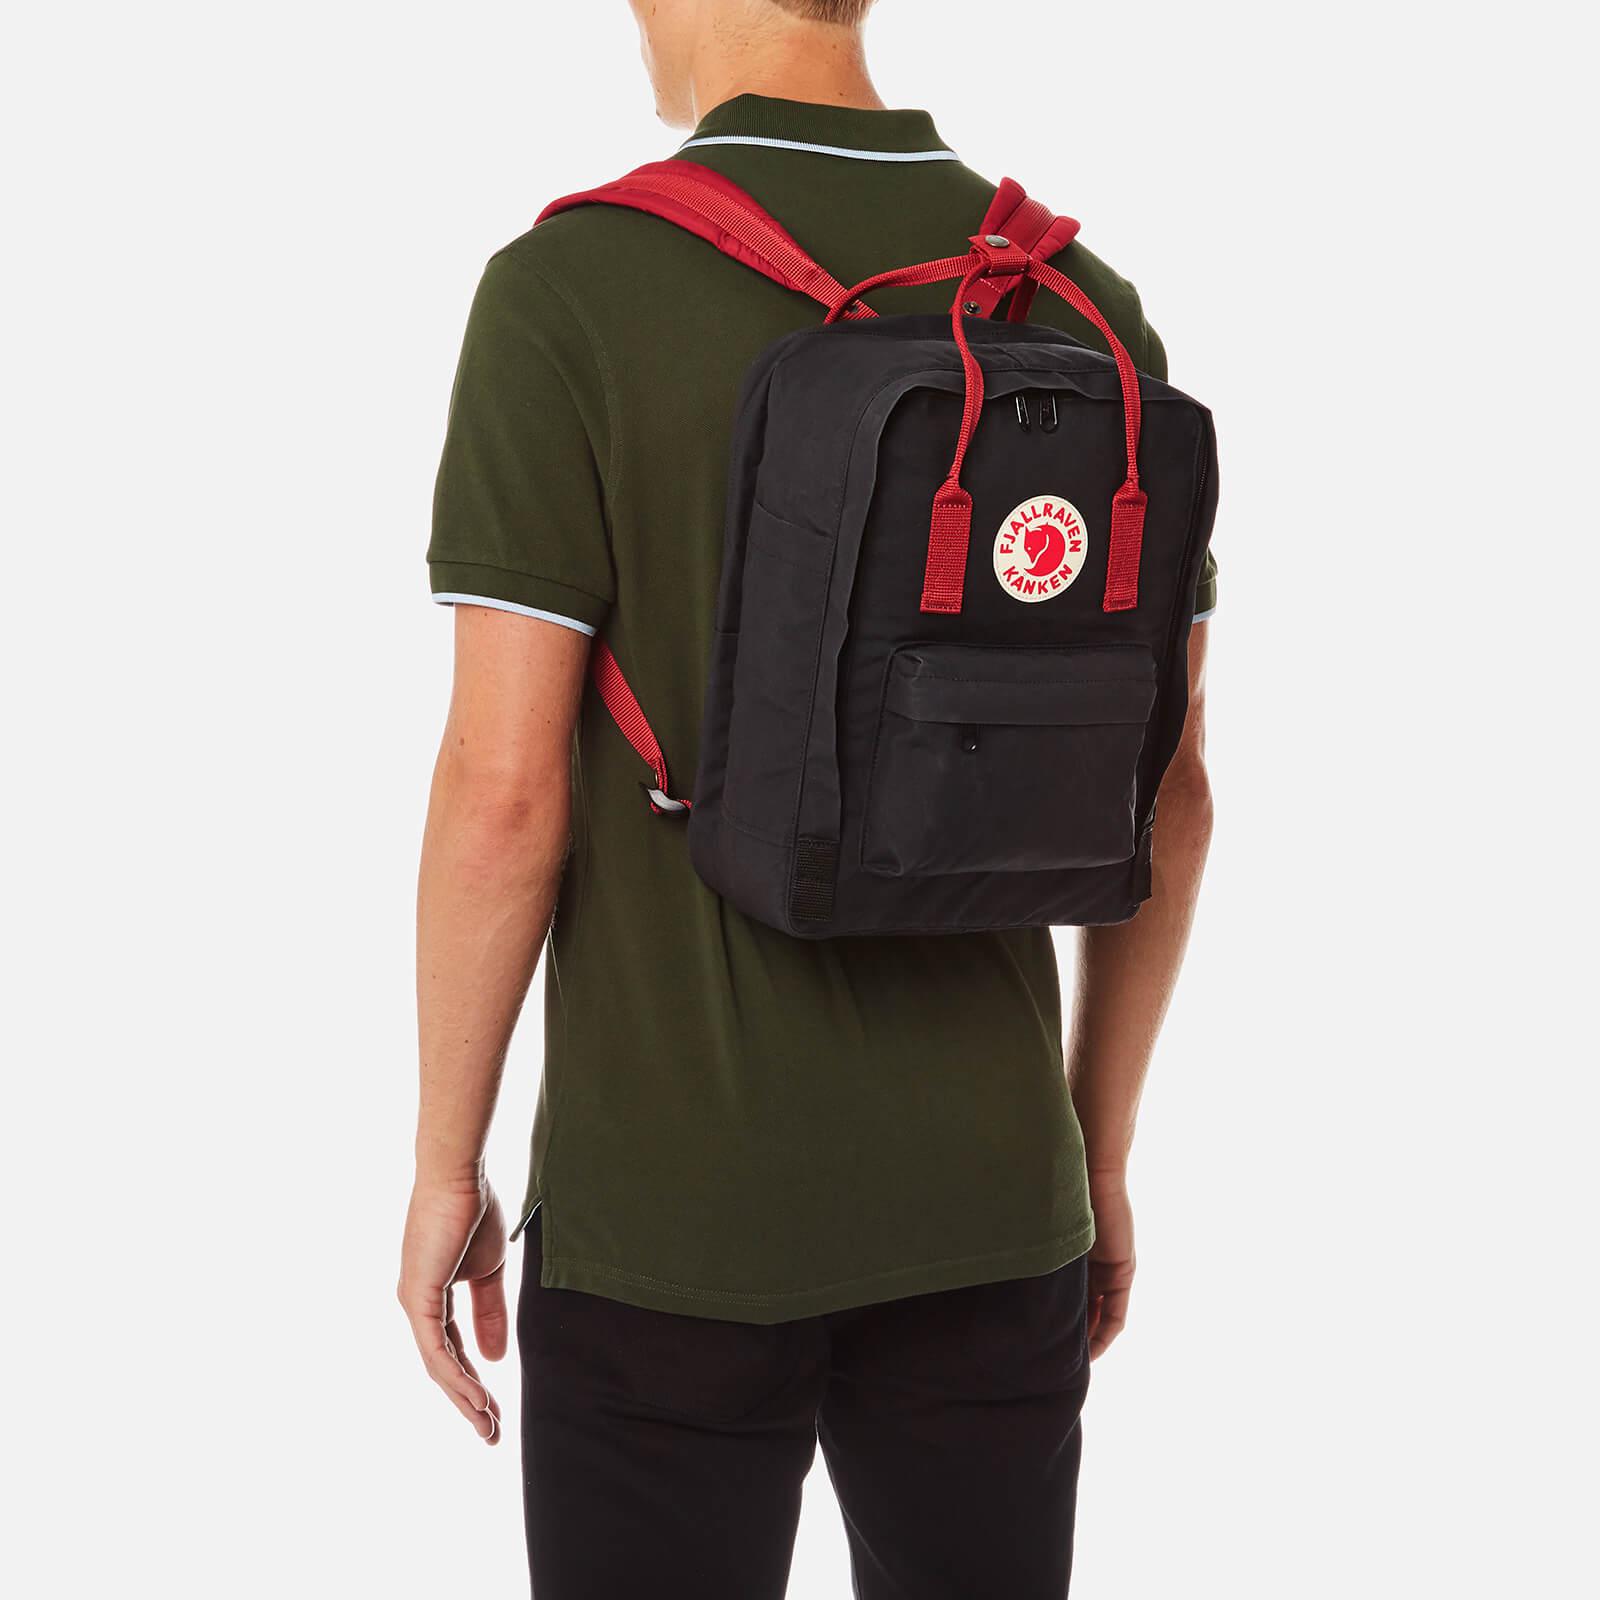 fjallraven+13+laptop+backpack Promotions